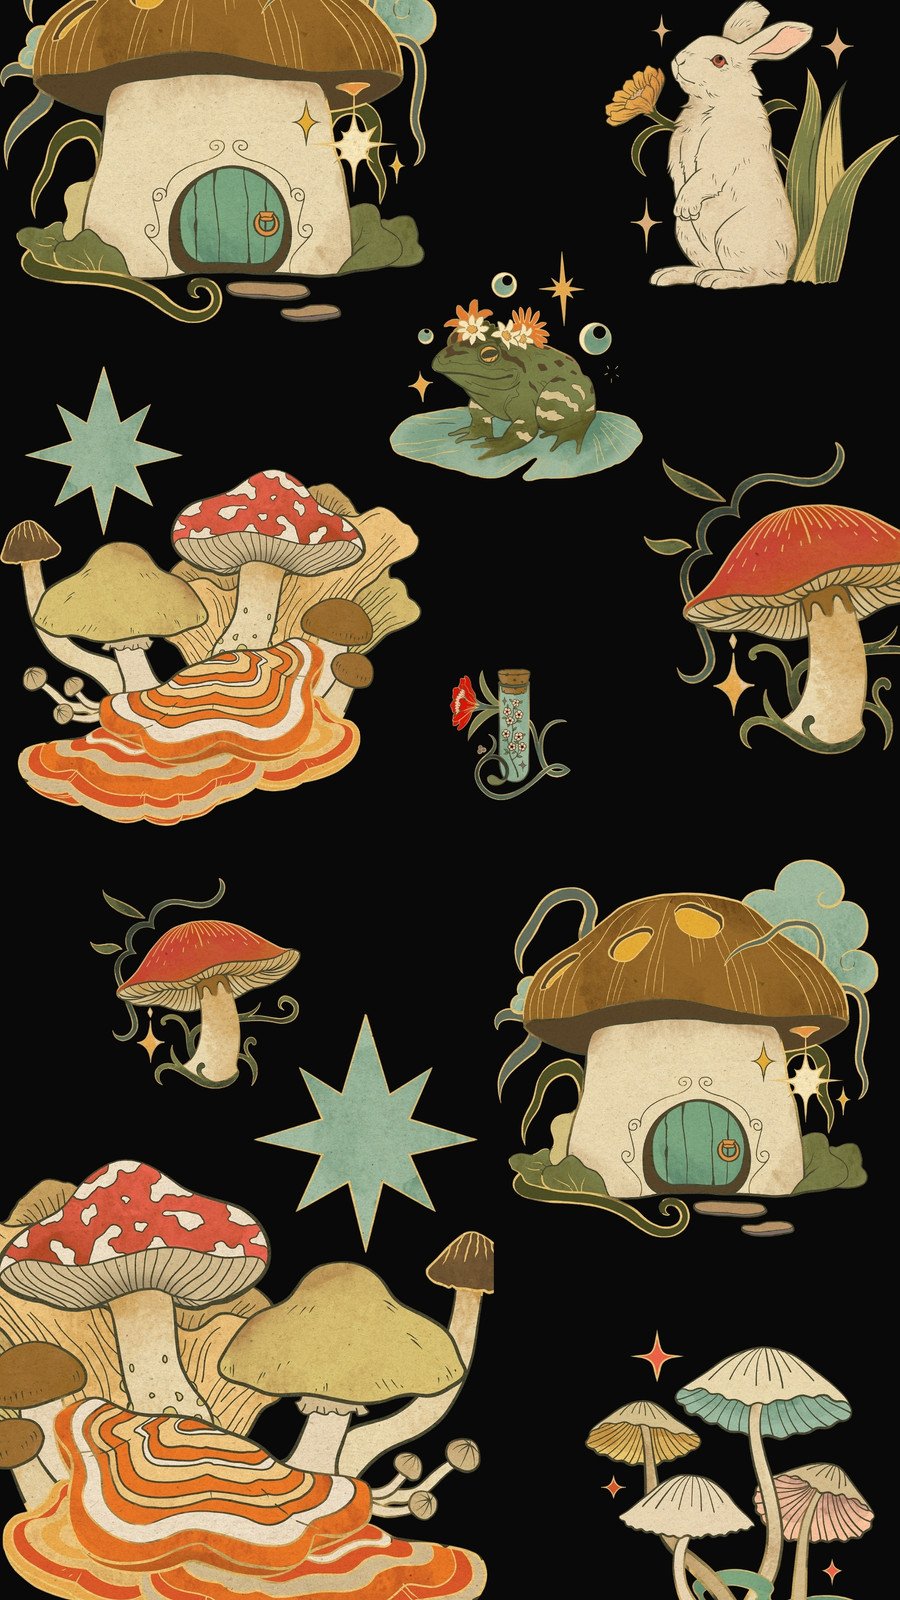 poster of a happy mushroom • PinkNounou